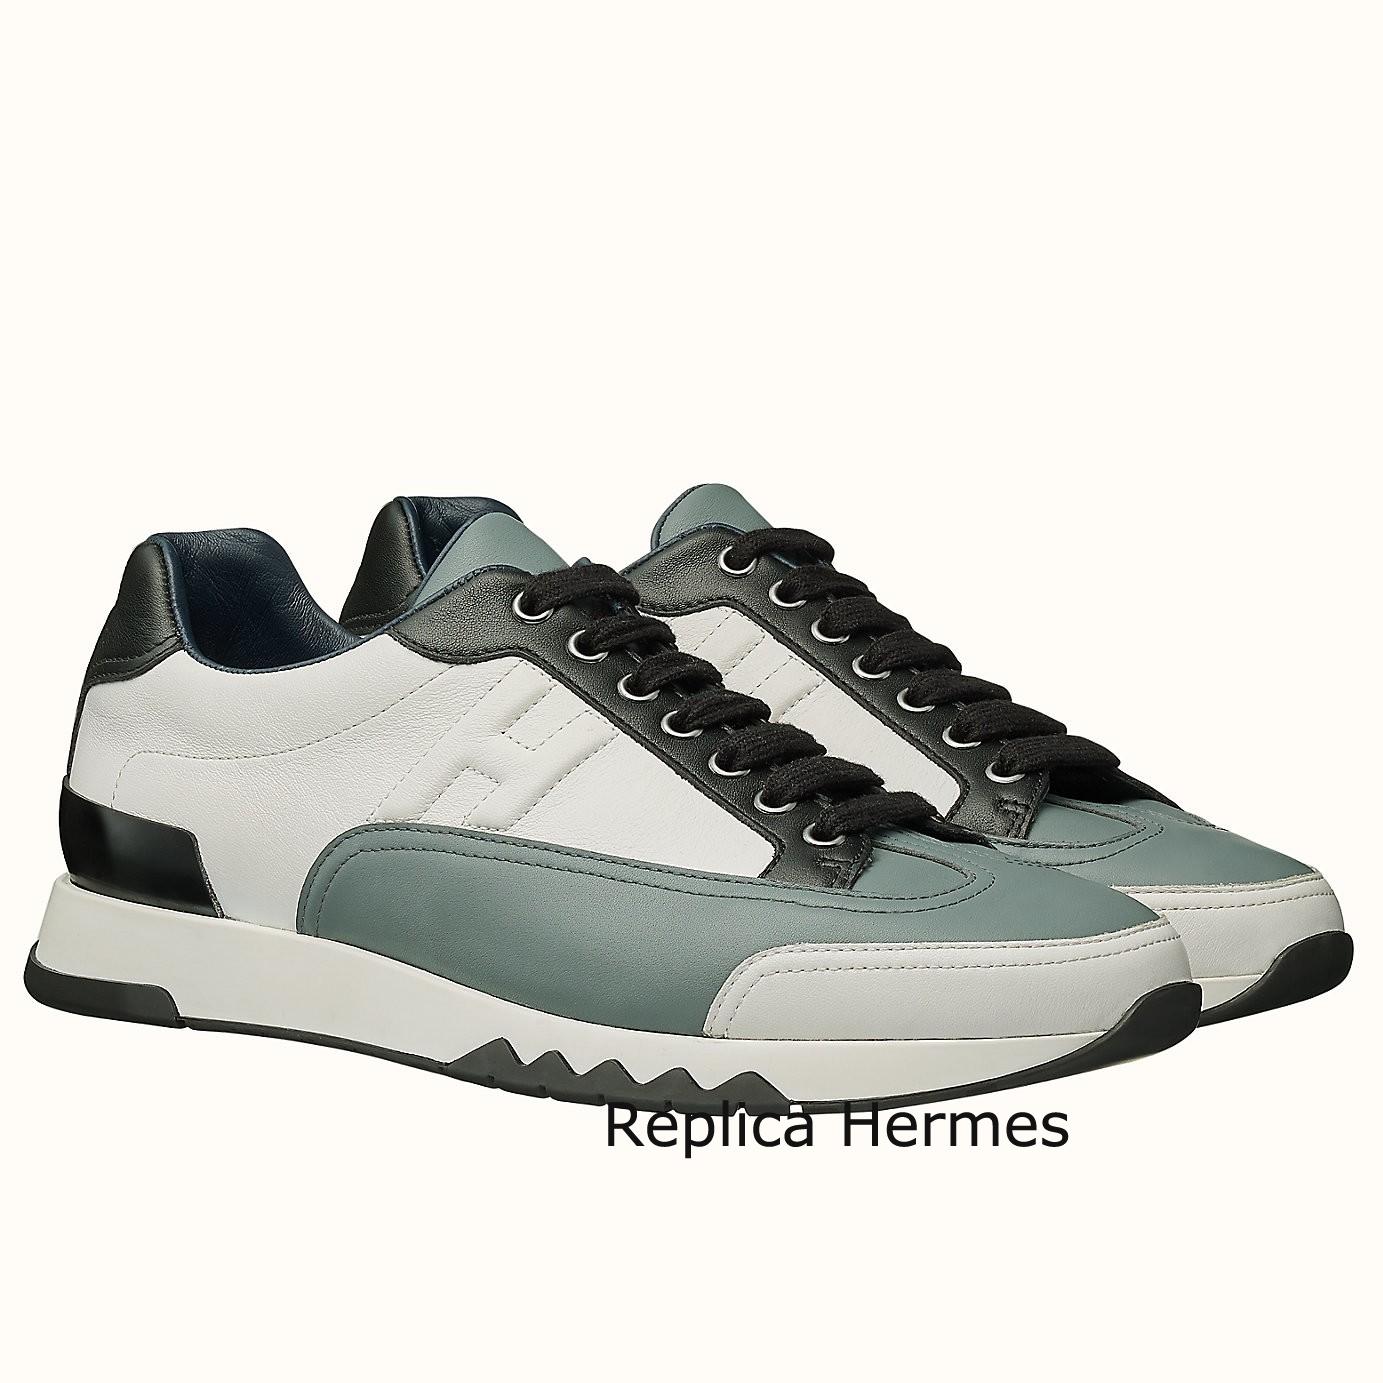 Fake High Quality Hermes Trail Sneaker In White/Blue Calfskin